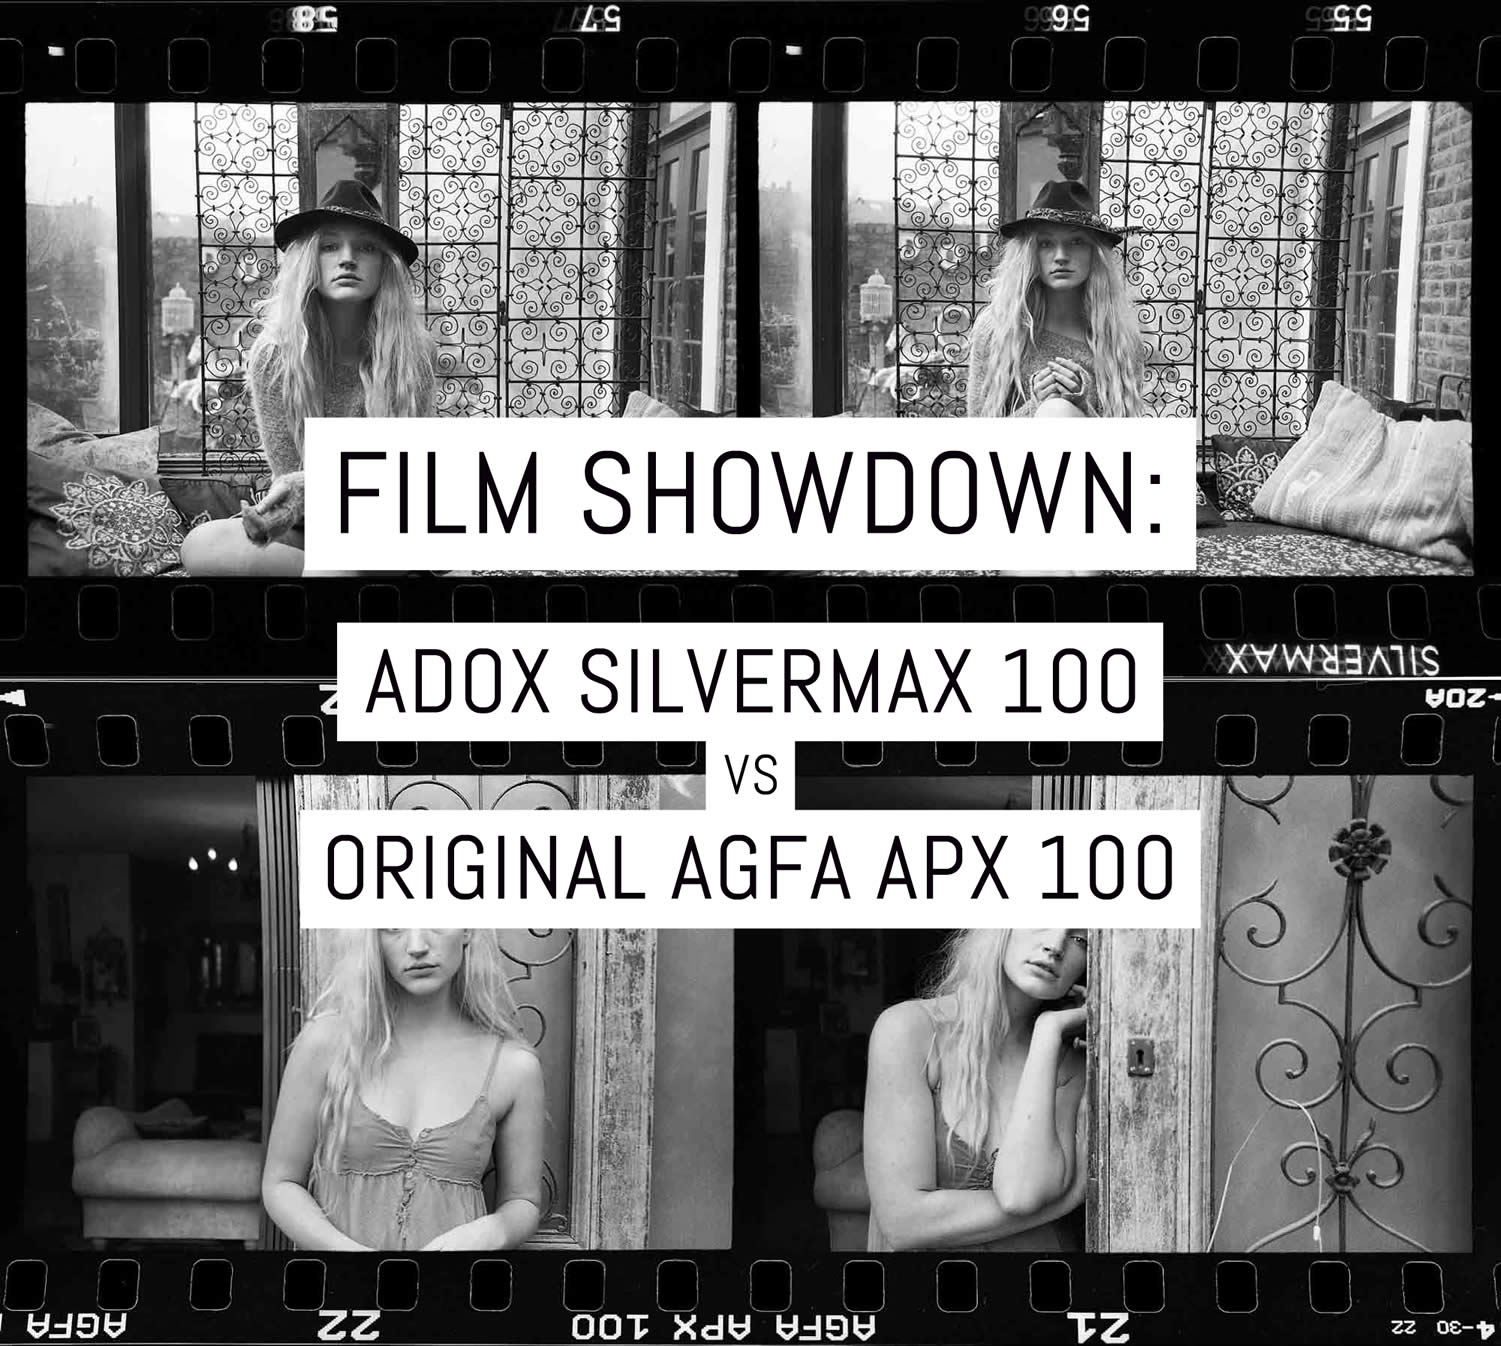 Film showdown: ADOX Silvermax 100 vs original Agfa APX 100